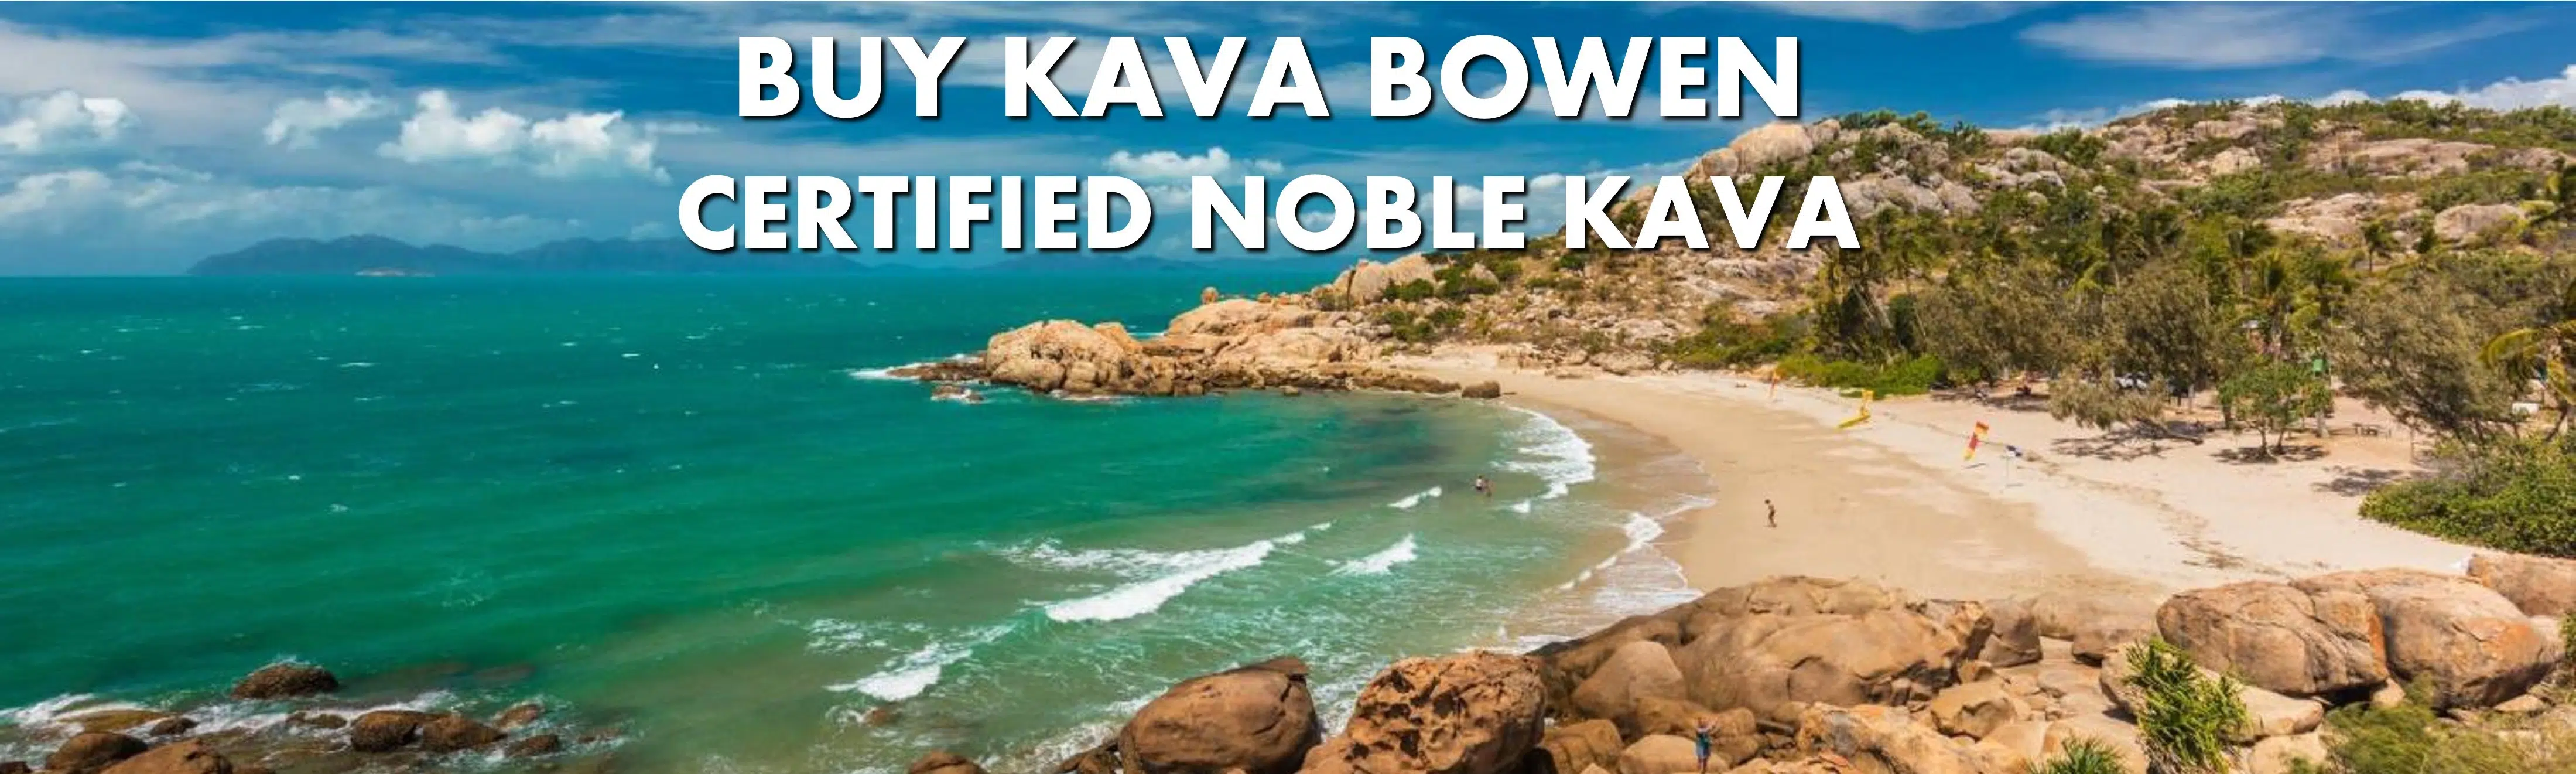 Beach scene in Bowen Queensland with caption Buy Kava Bowen Certified Noble Kava